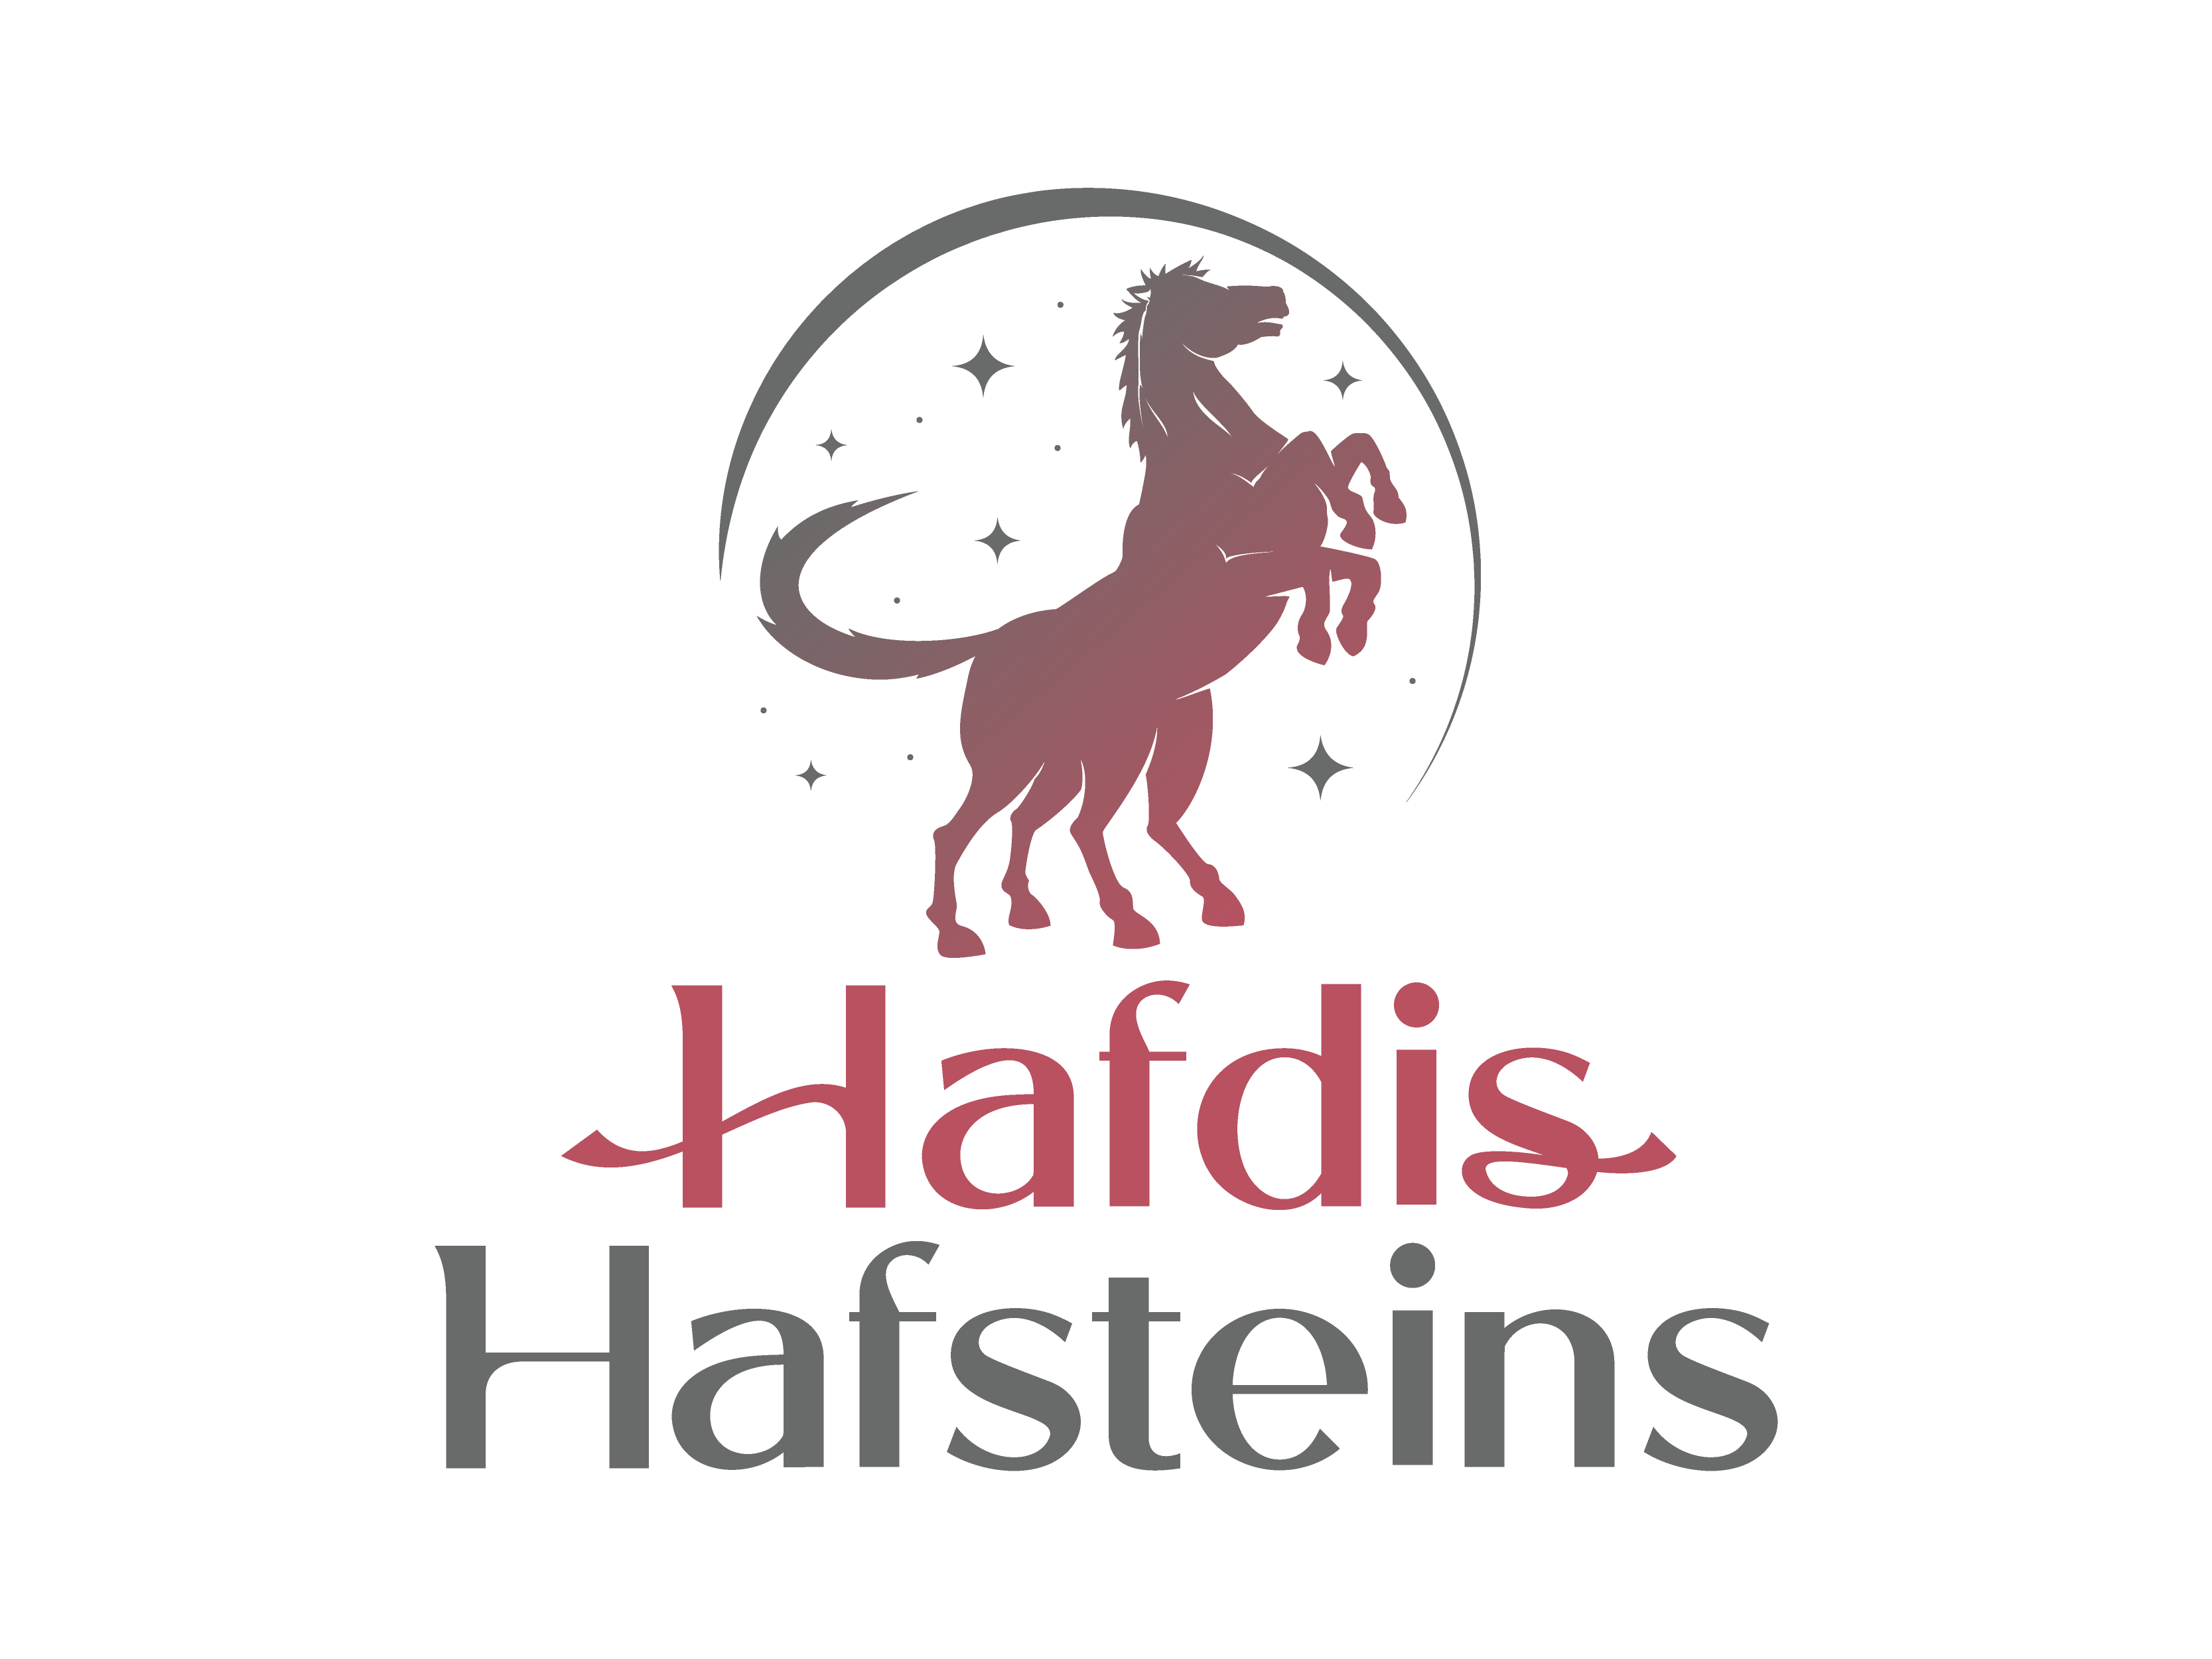 Hafdis Hafsteins Logo of an 8 legged horse